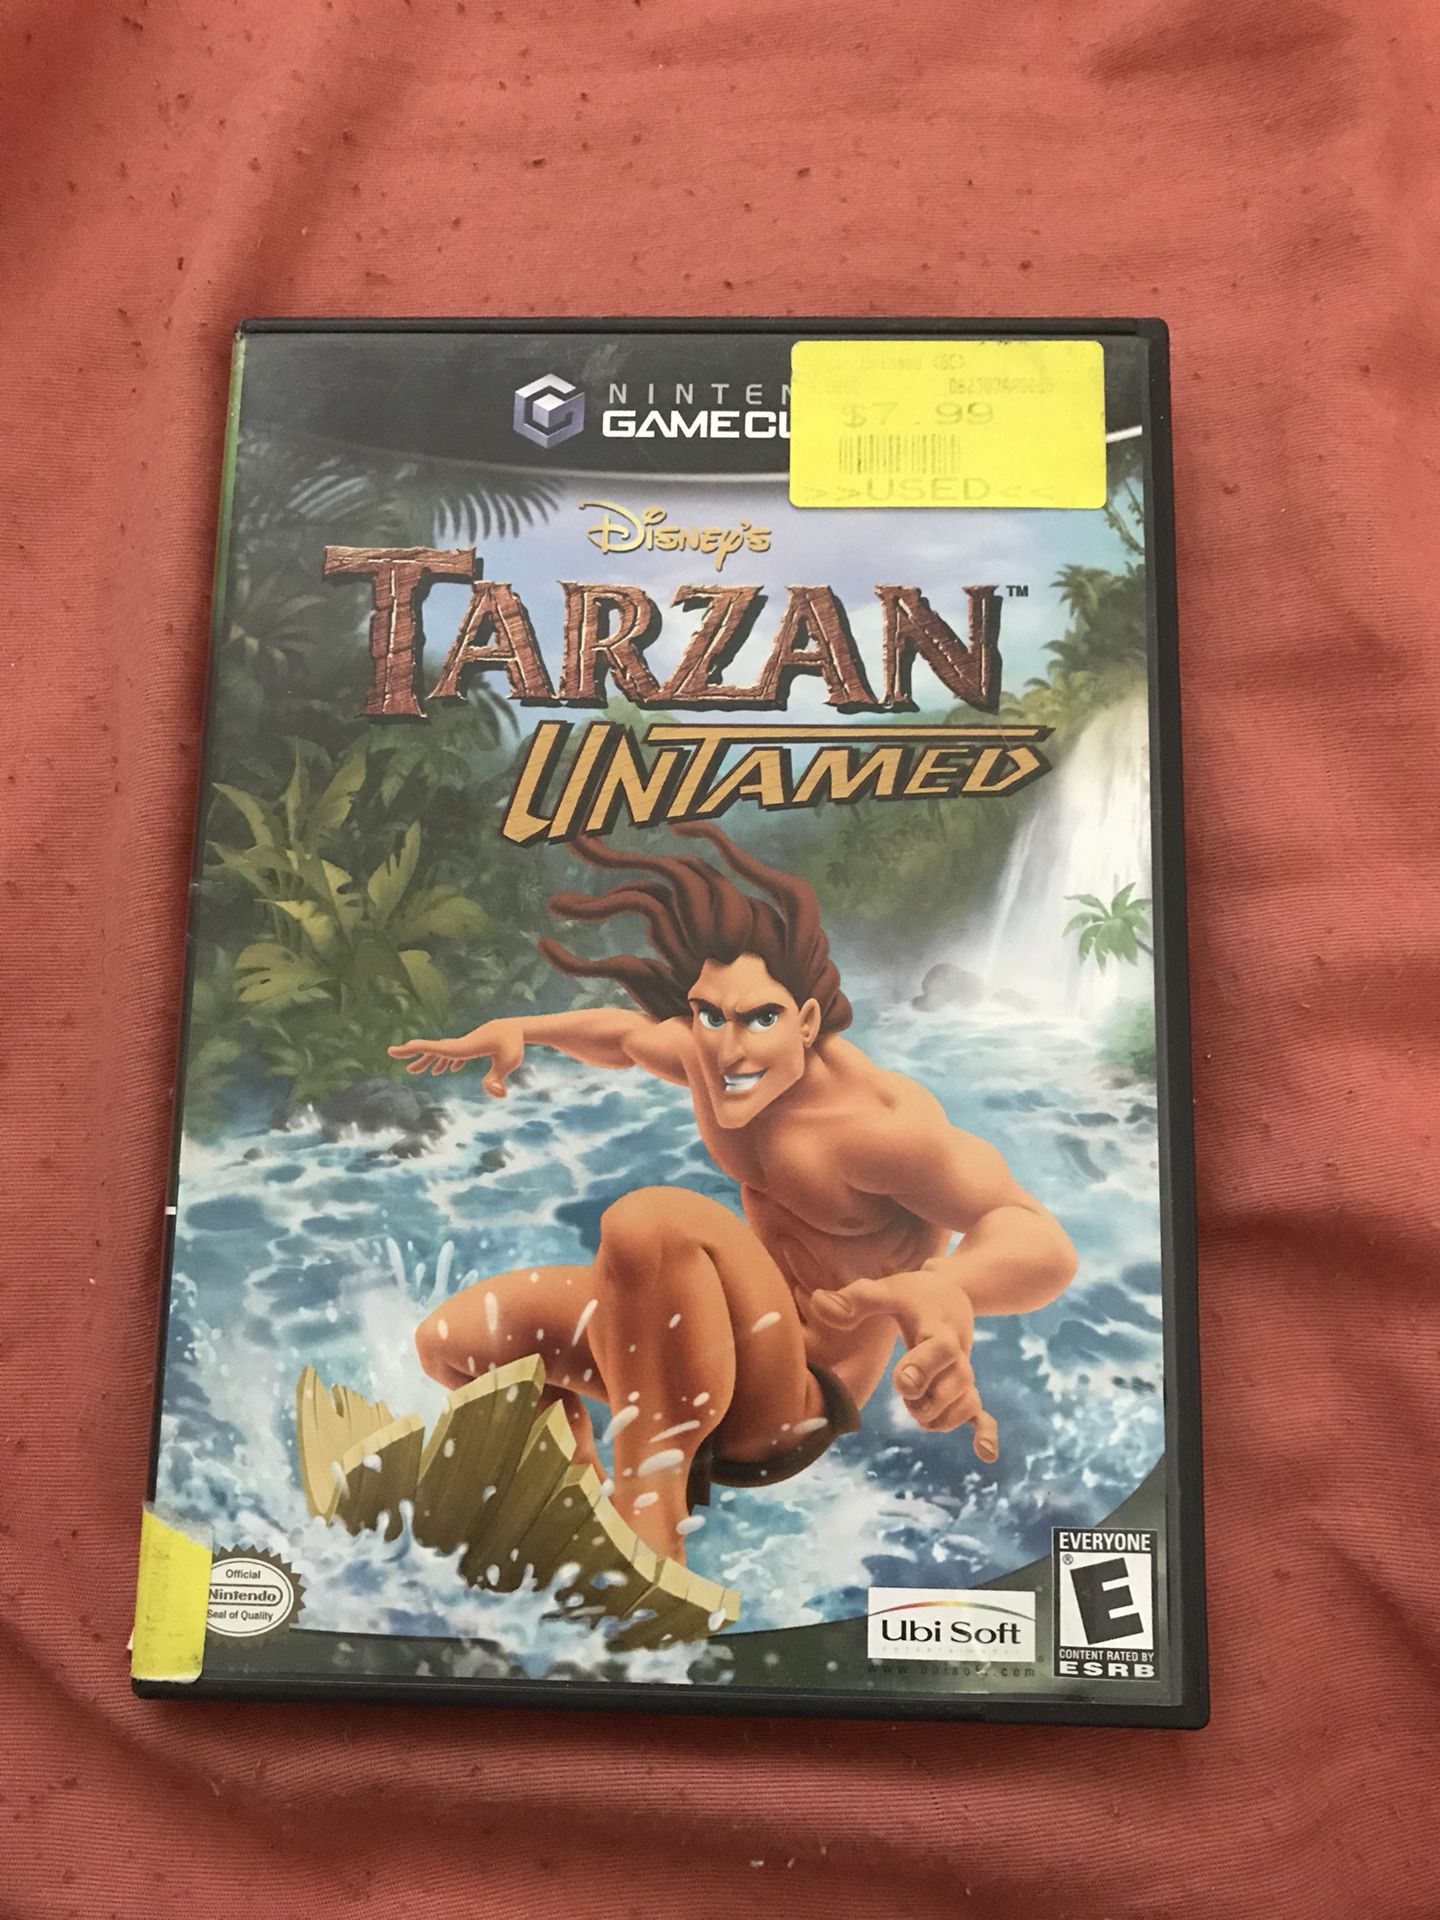 GameCube Tarzan untamed game